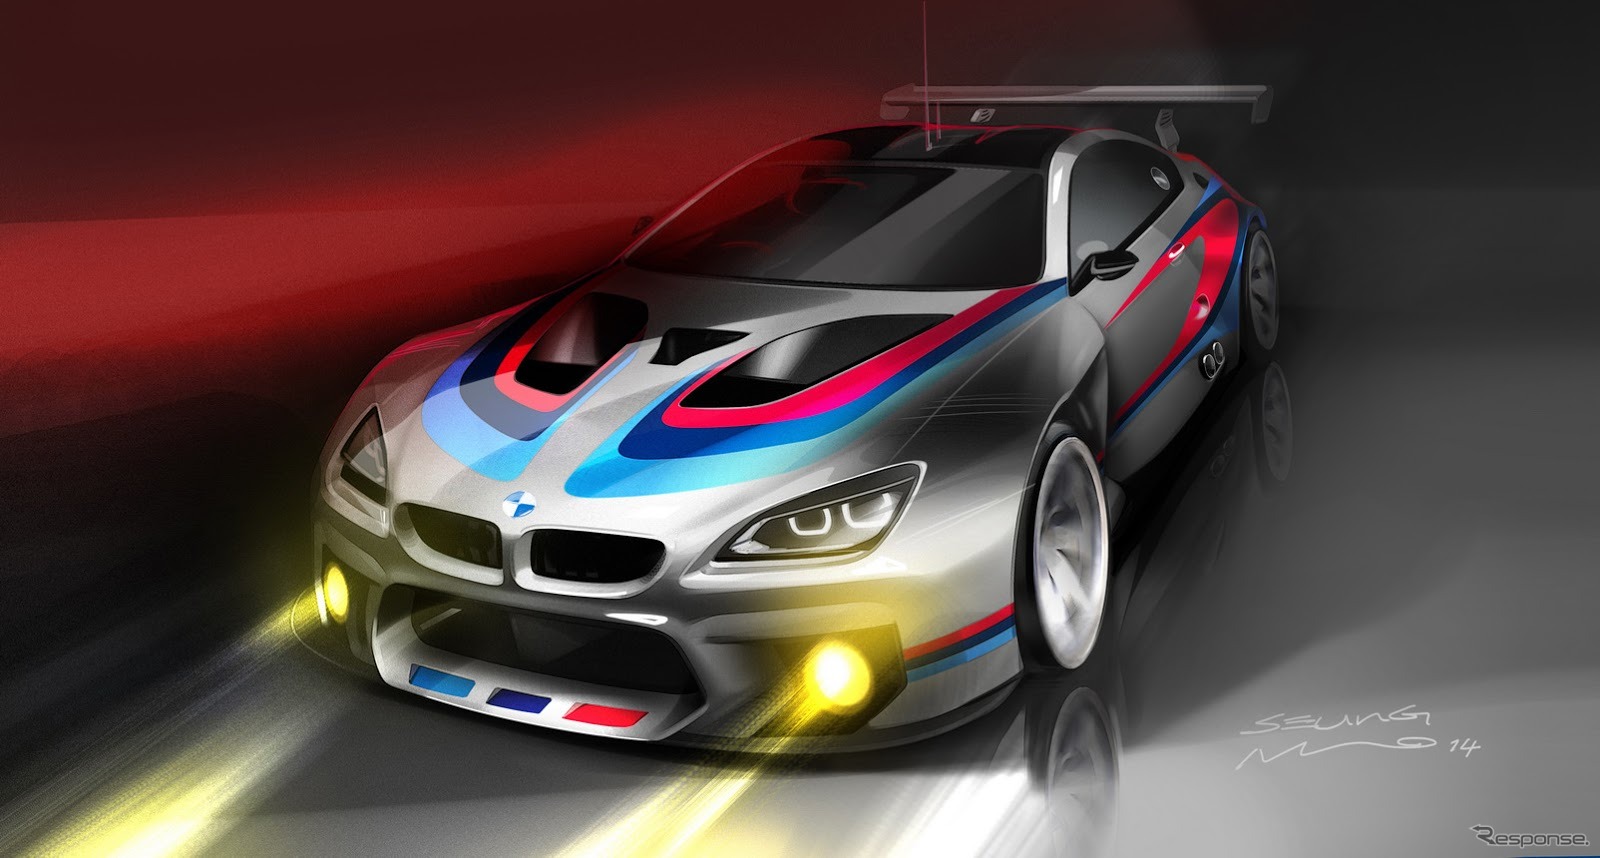 BMW M6 GT3 の予告スケッチ